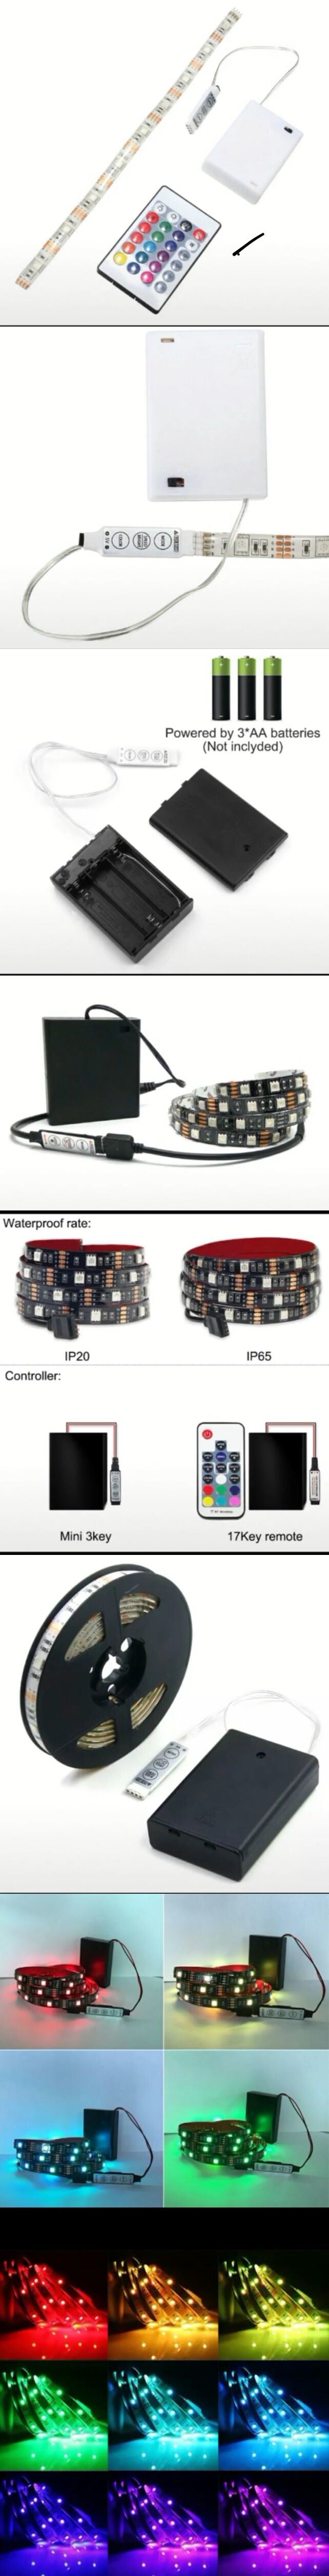 5m 12V Non-Waterproof Waterproof RGB Flexible LED Strip Kit